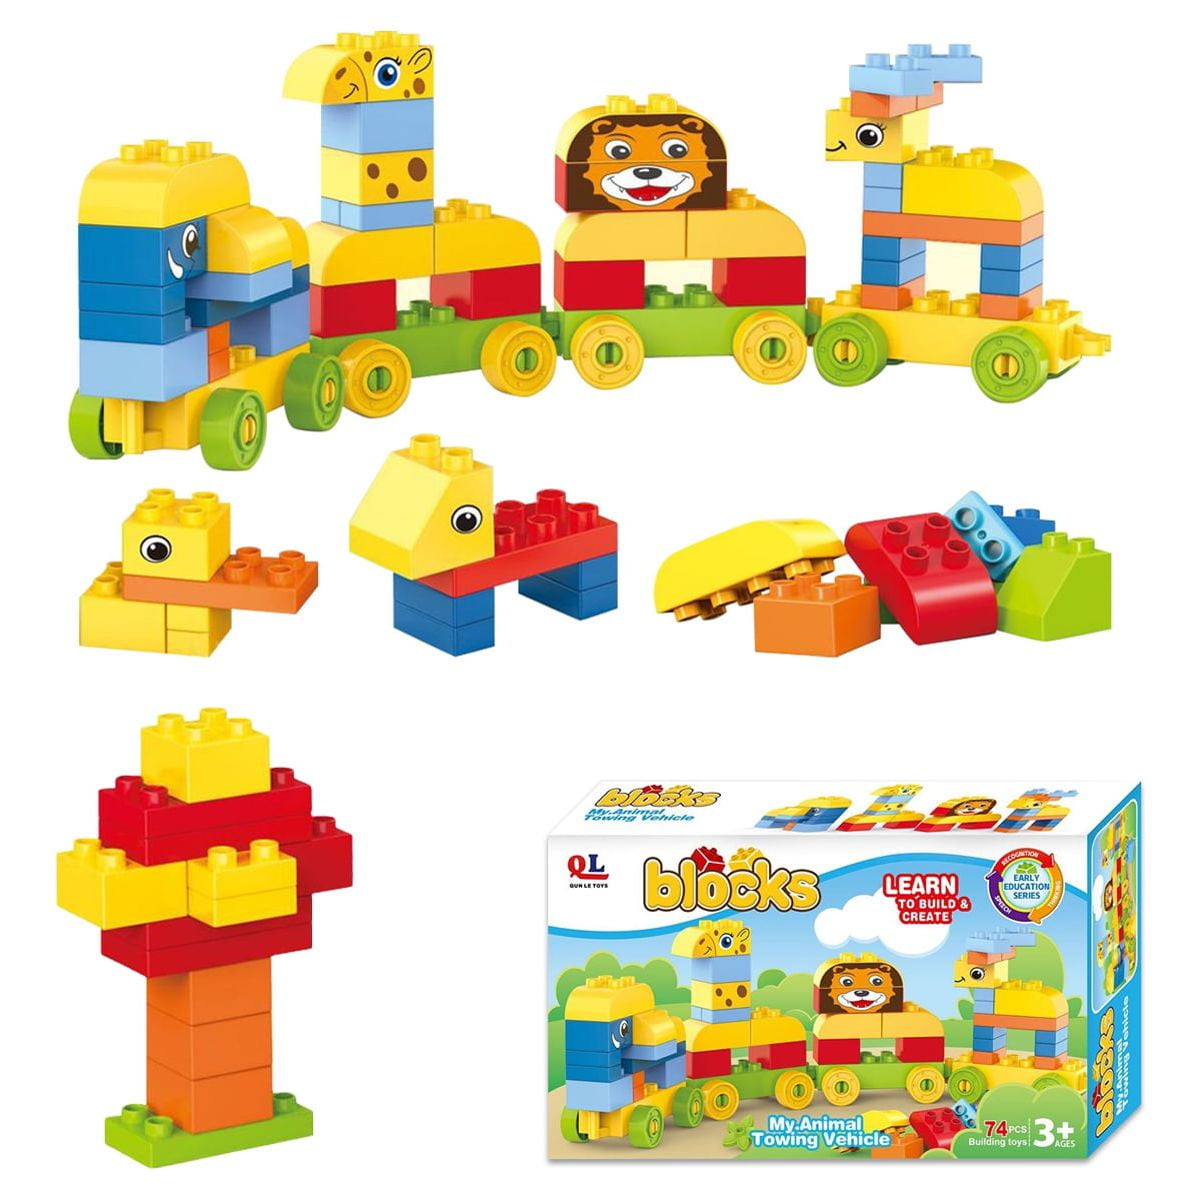 Building Blocks For Kids, Toys Blocks